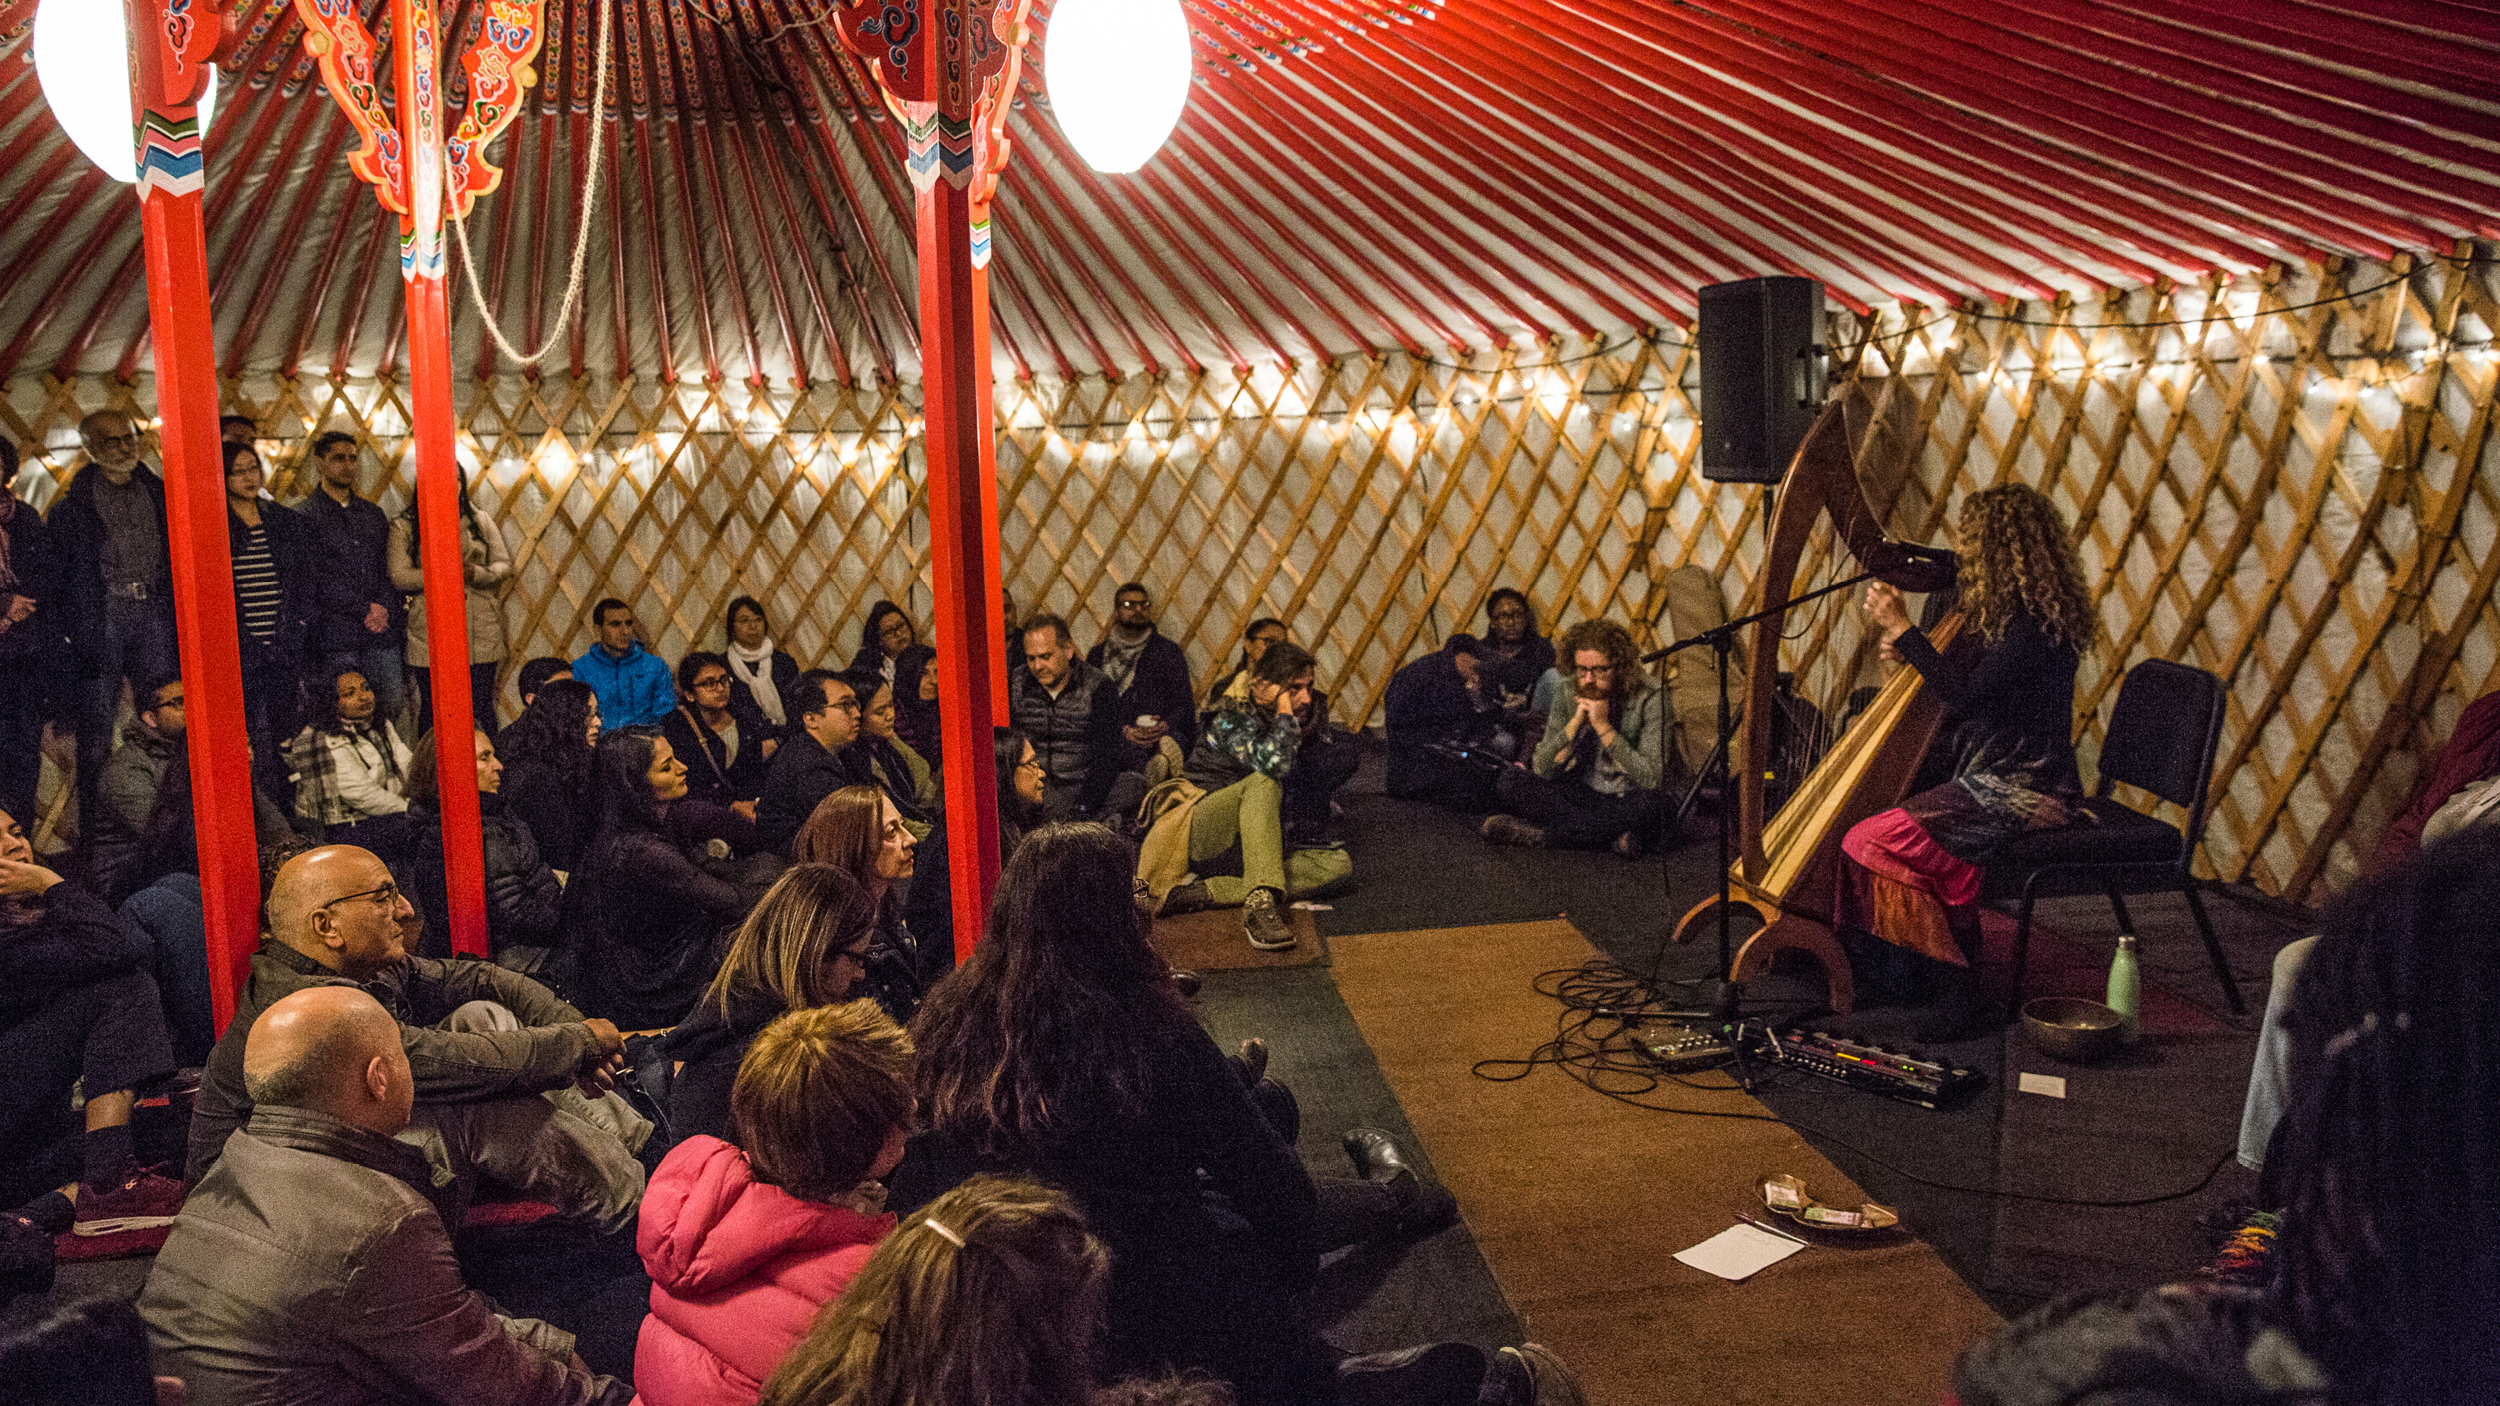 Spectators sitting on the floor enjoy the music of a harp player inside a Mongolian yurt.